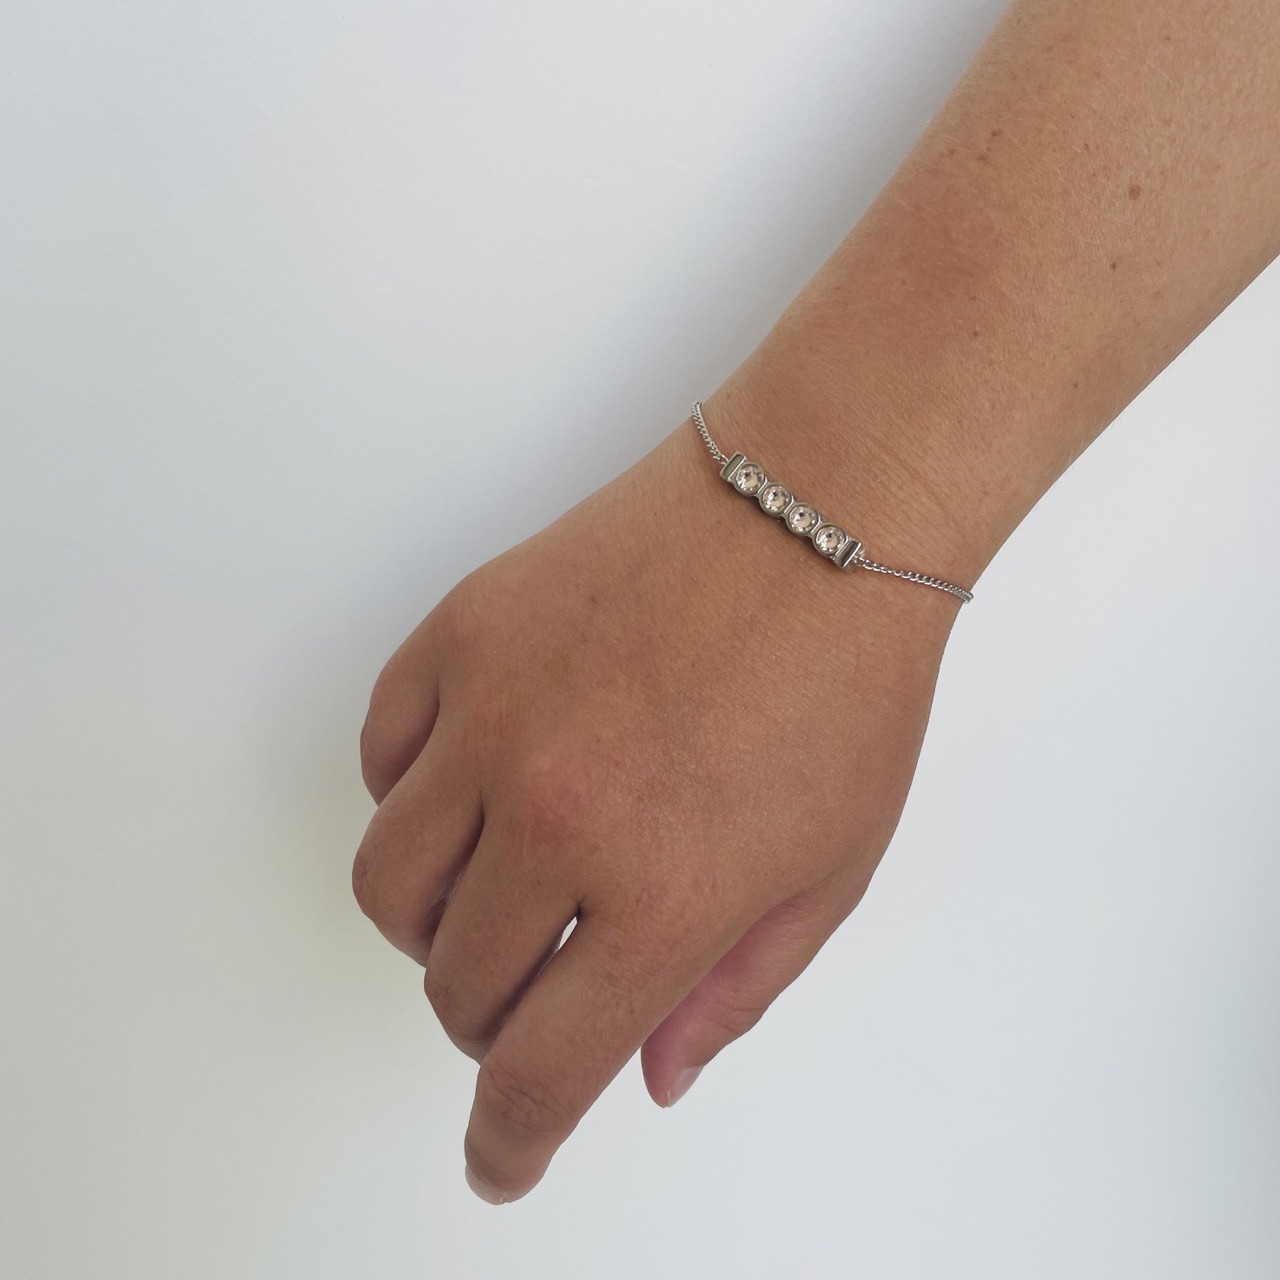 Silver bracelet soft pink stones